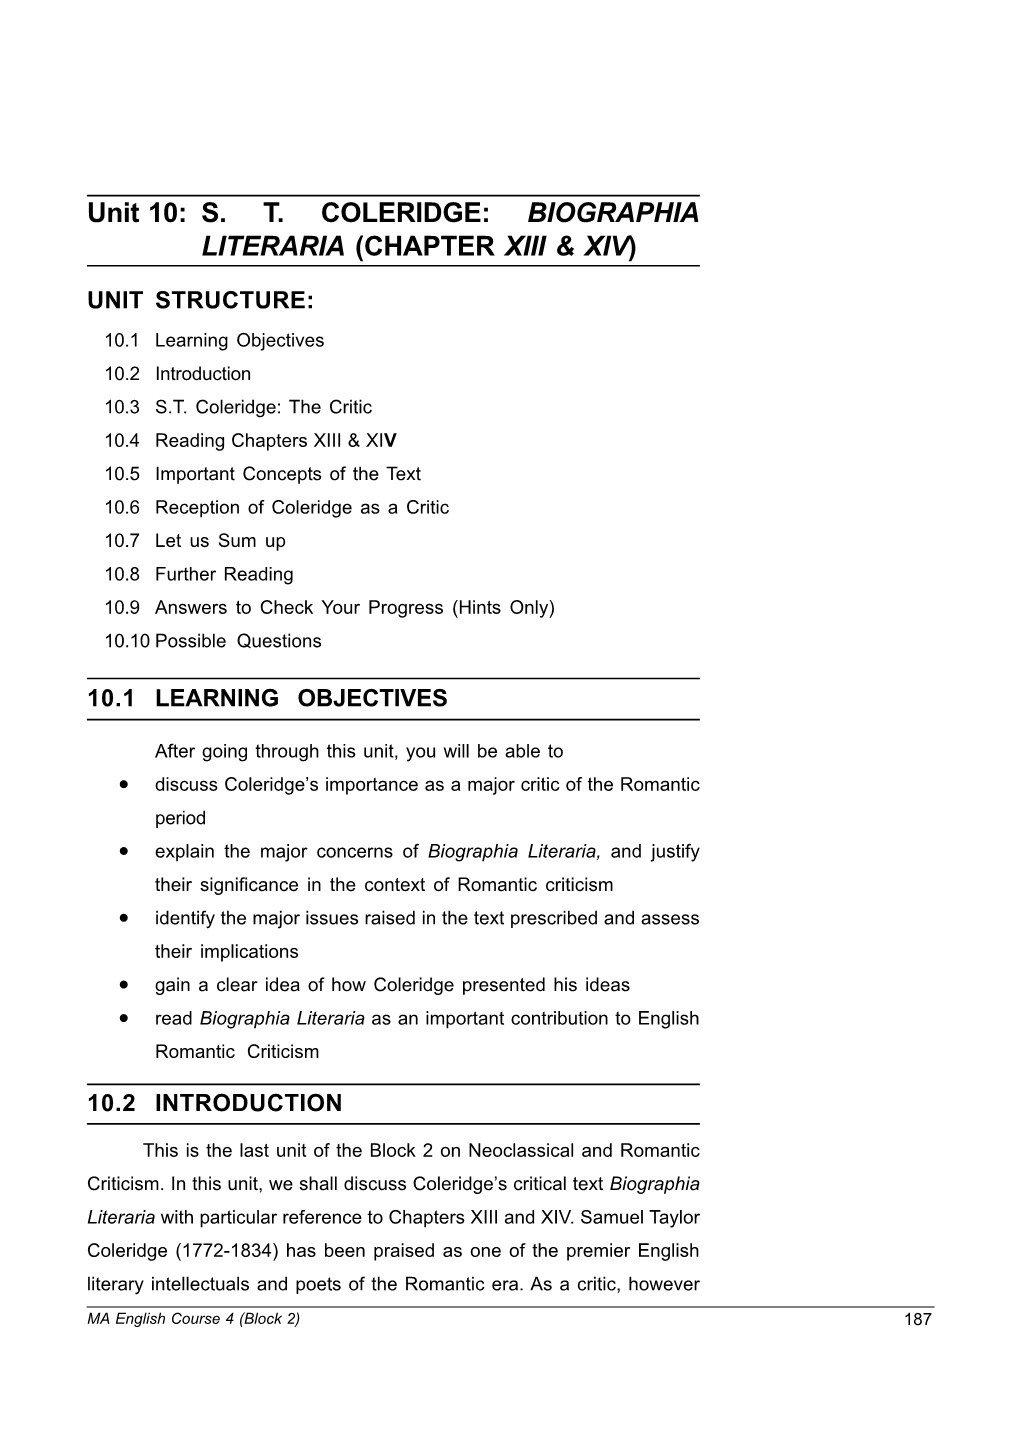 Biographia Literaria (Chapter XIII & XIV) Unit 10 Unit 10: S